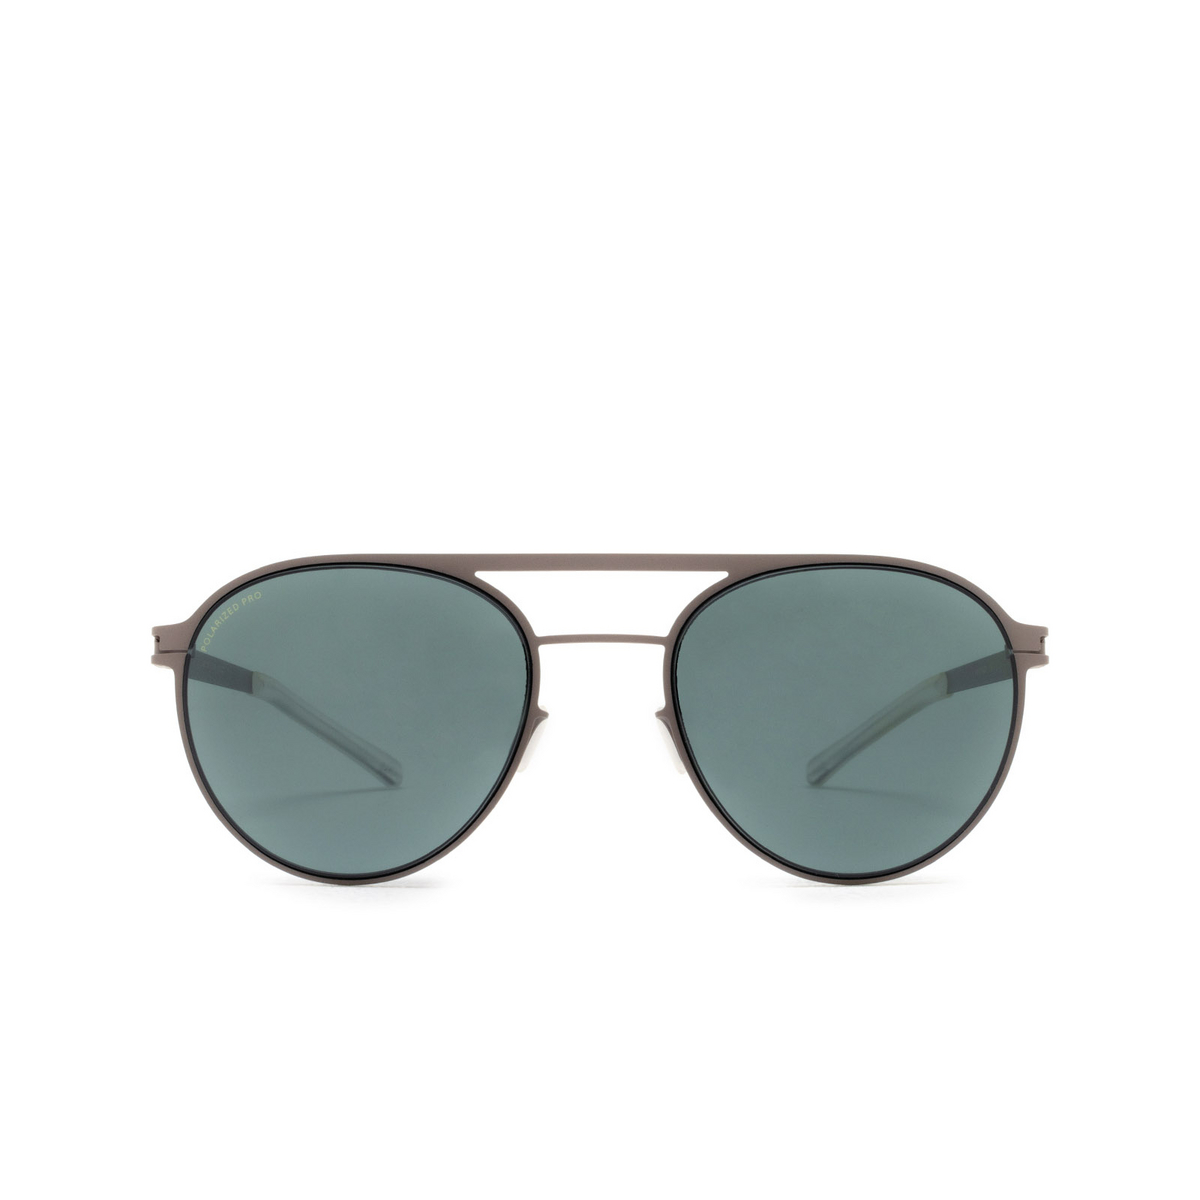 Mykita BRADLEY Sunglasses 570 Mole Grey/Indigo - front view